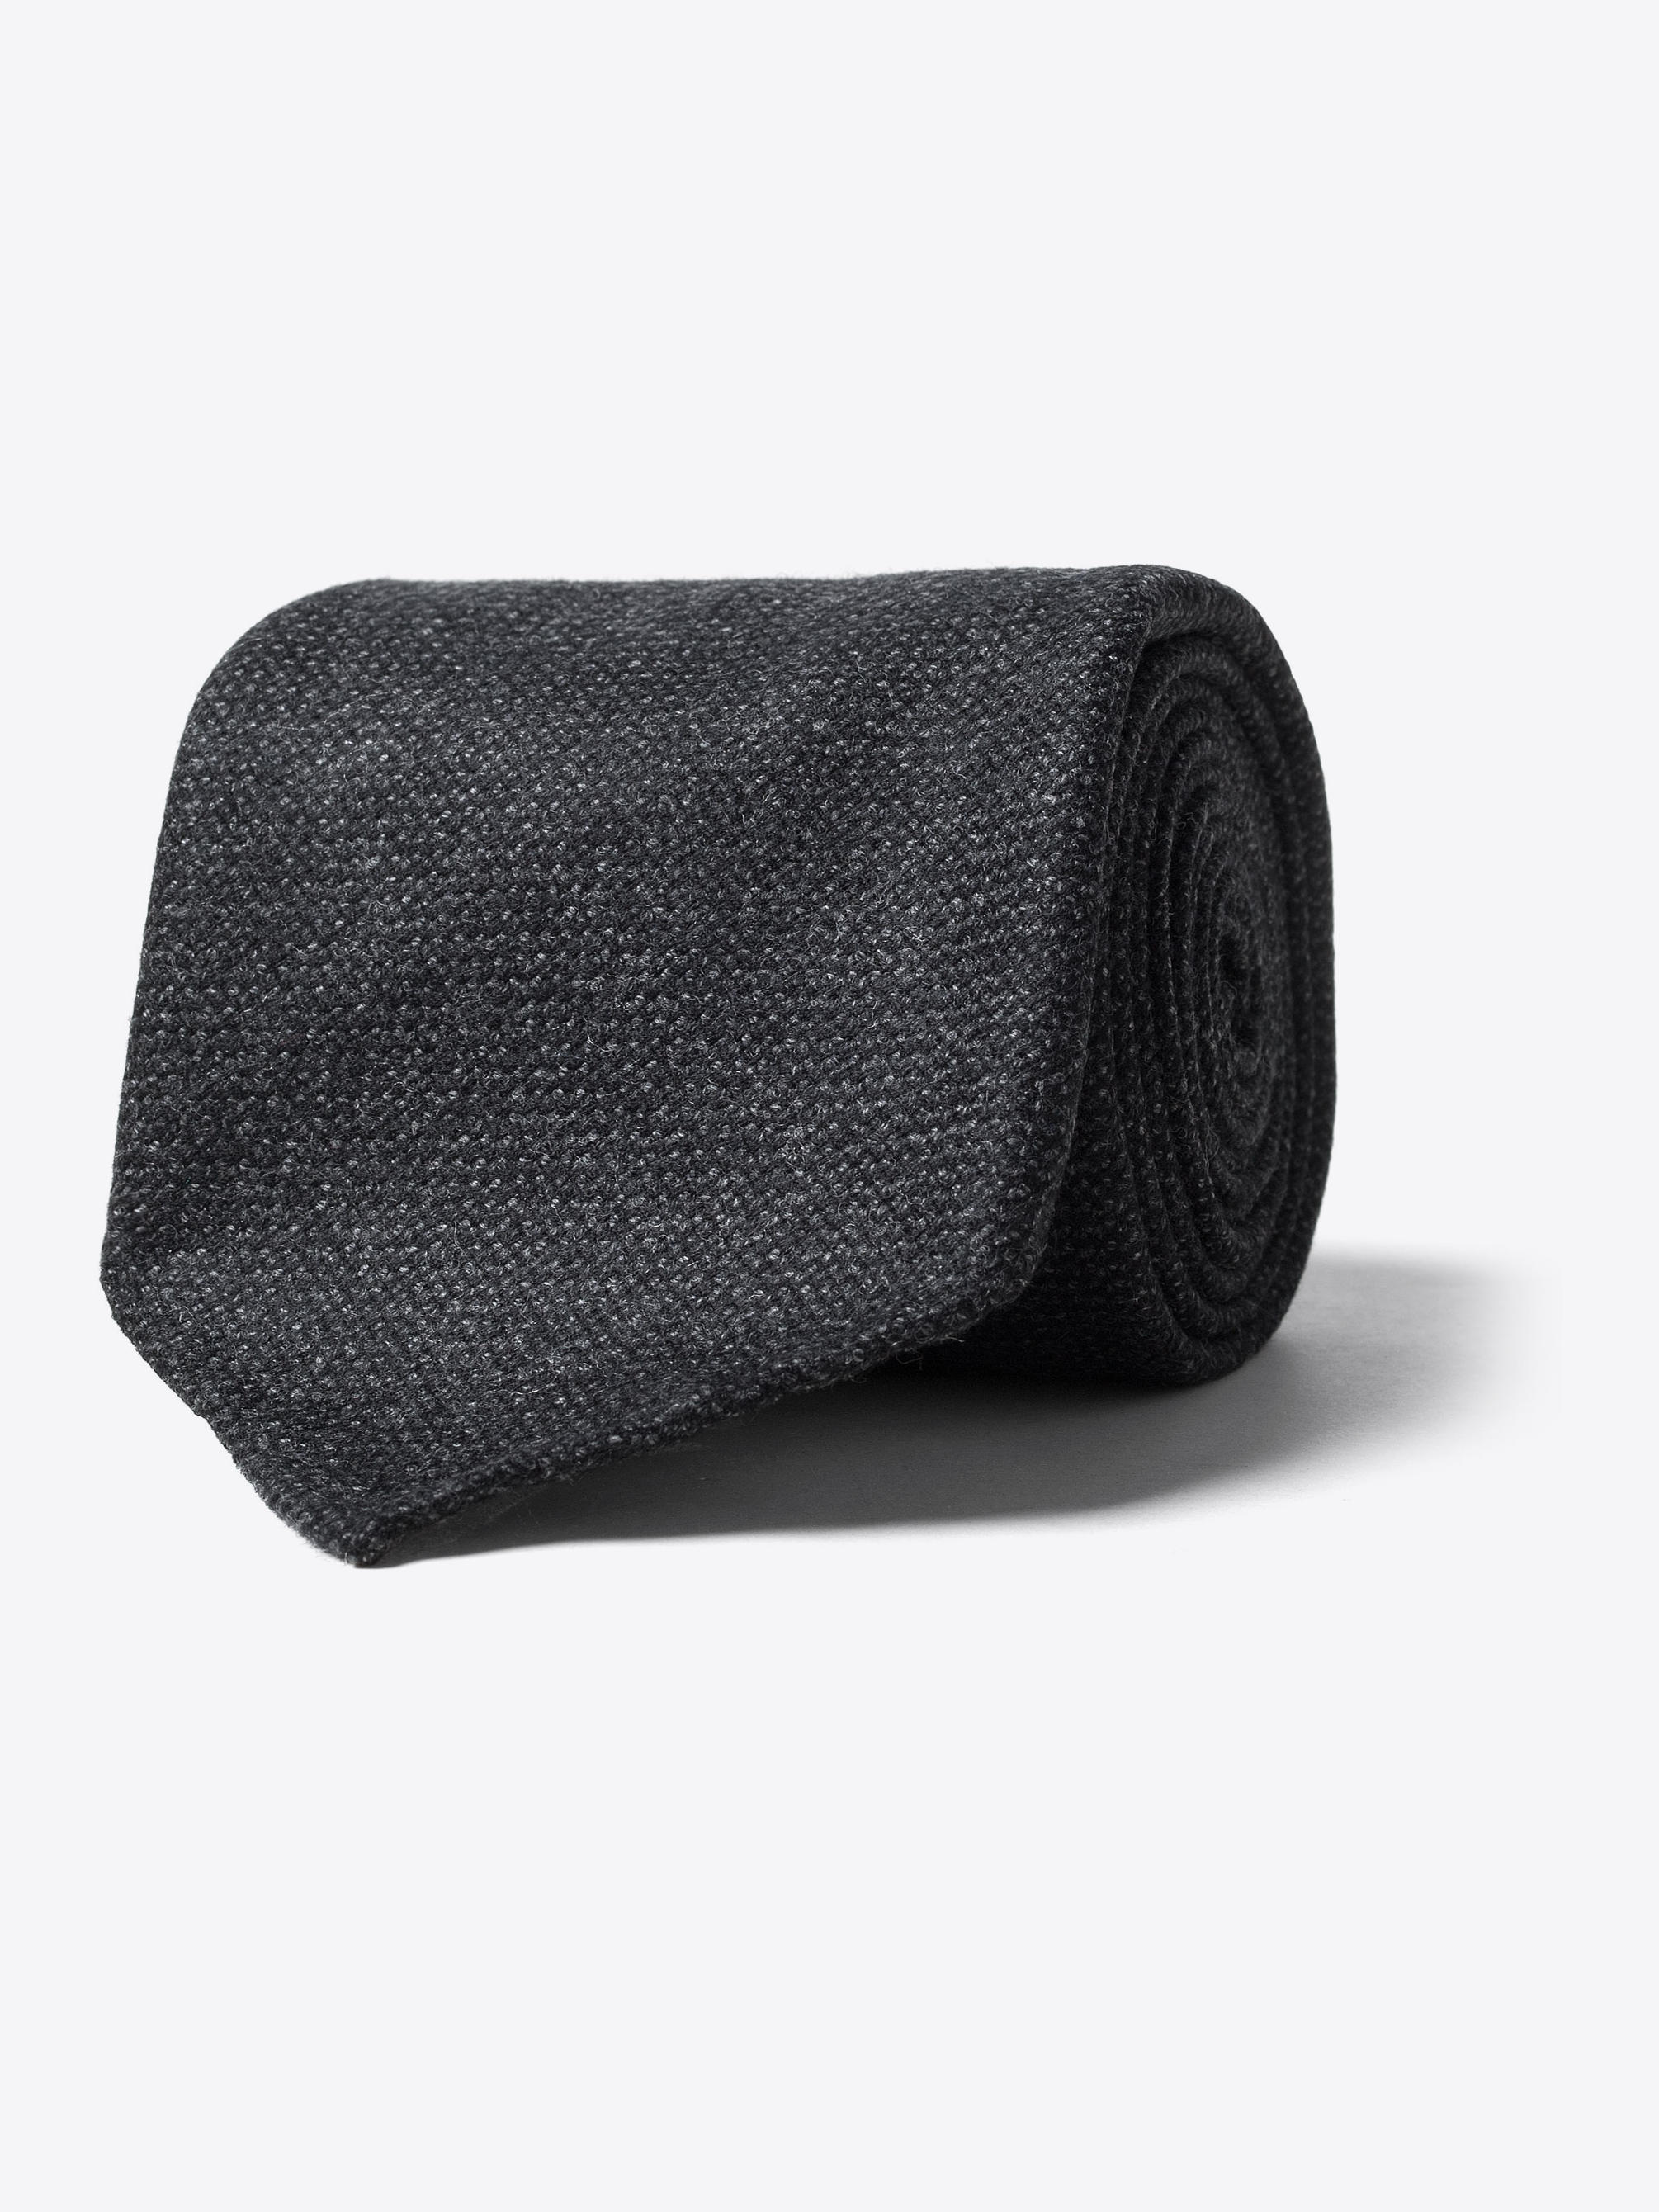 Zoom Image of Charcoal Hopsack Wool Untipped Tie